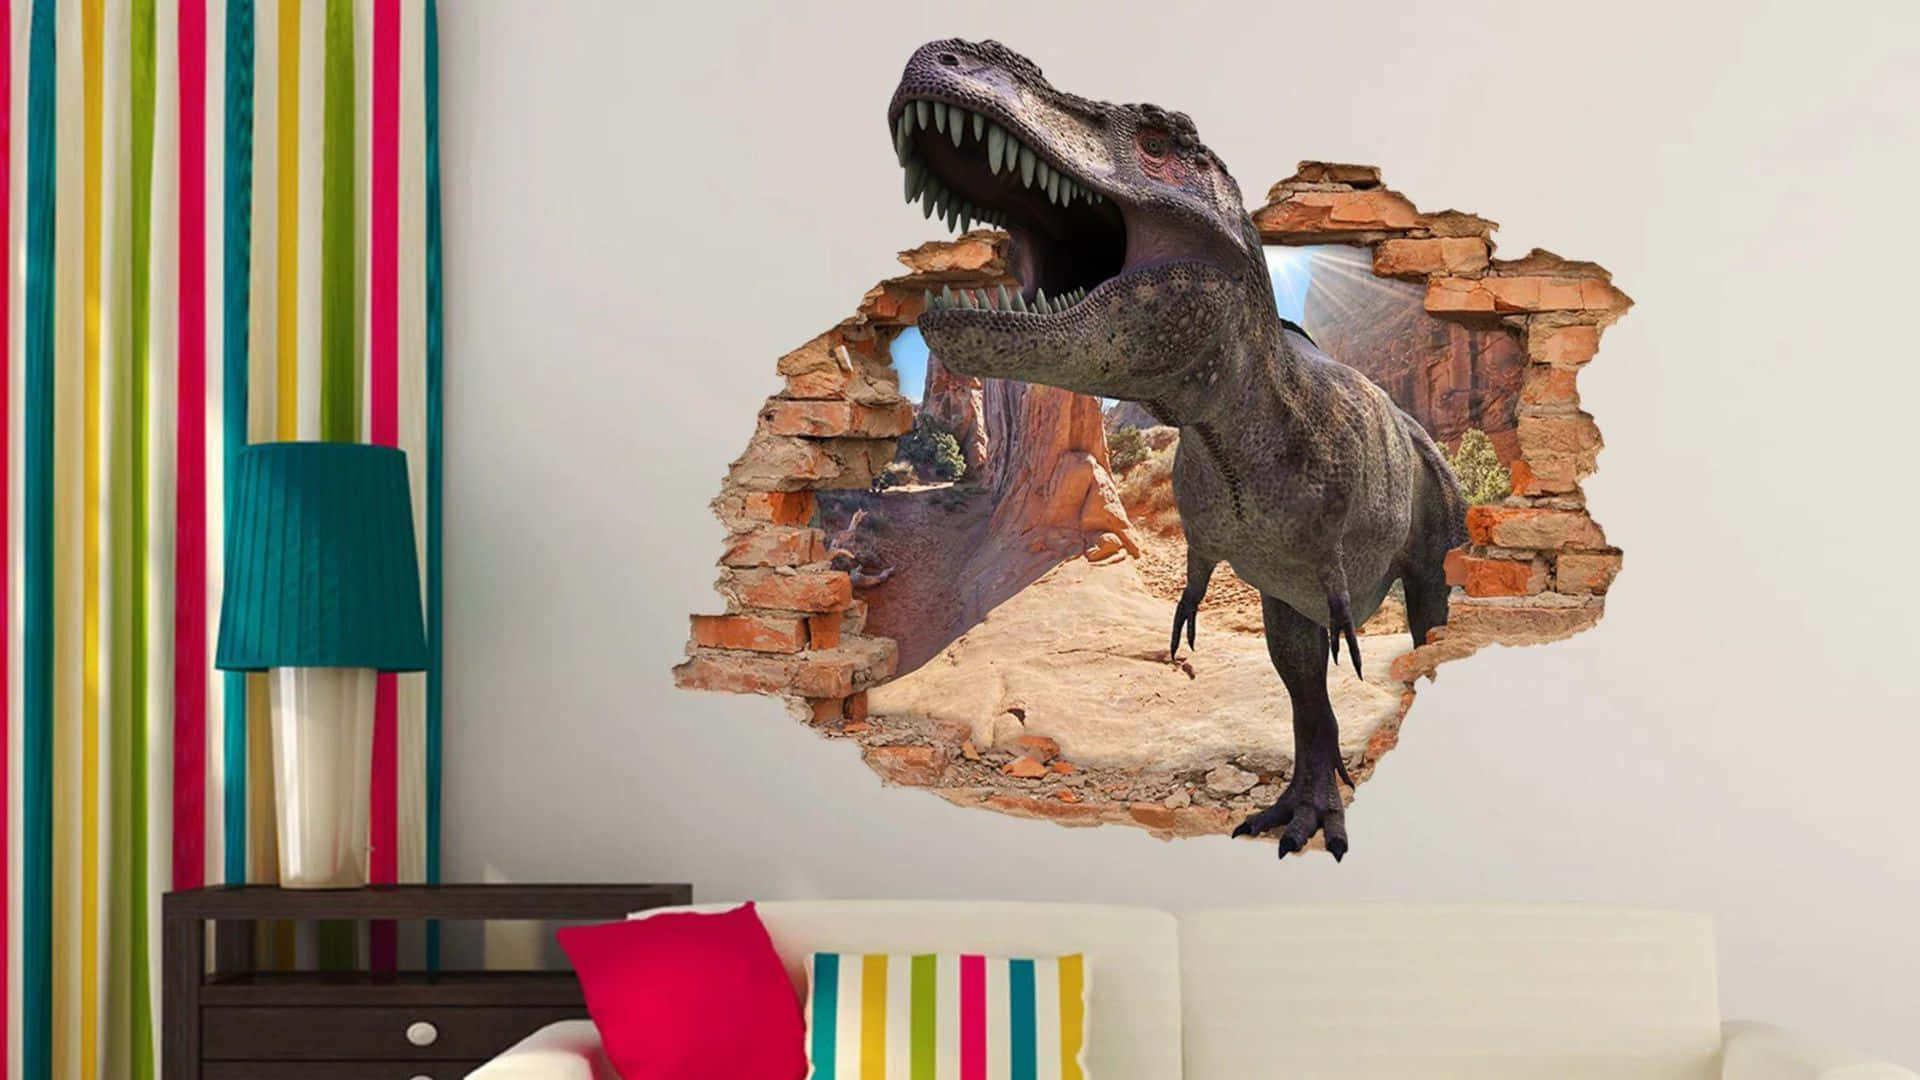 A mesmerizing 3D image of a Dinosaur. Wallpaper